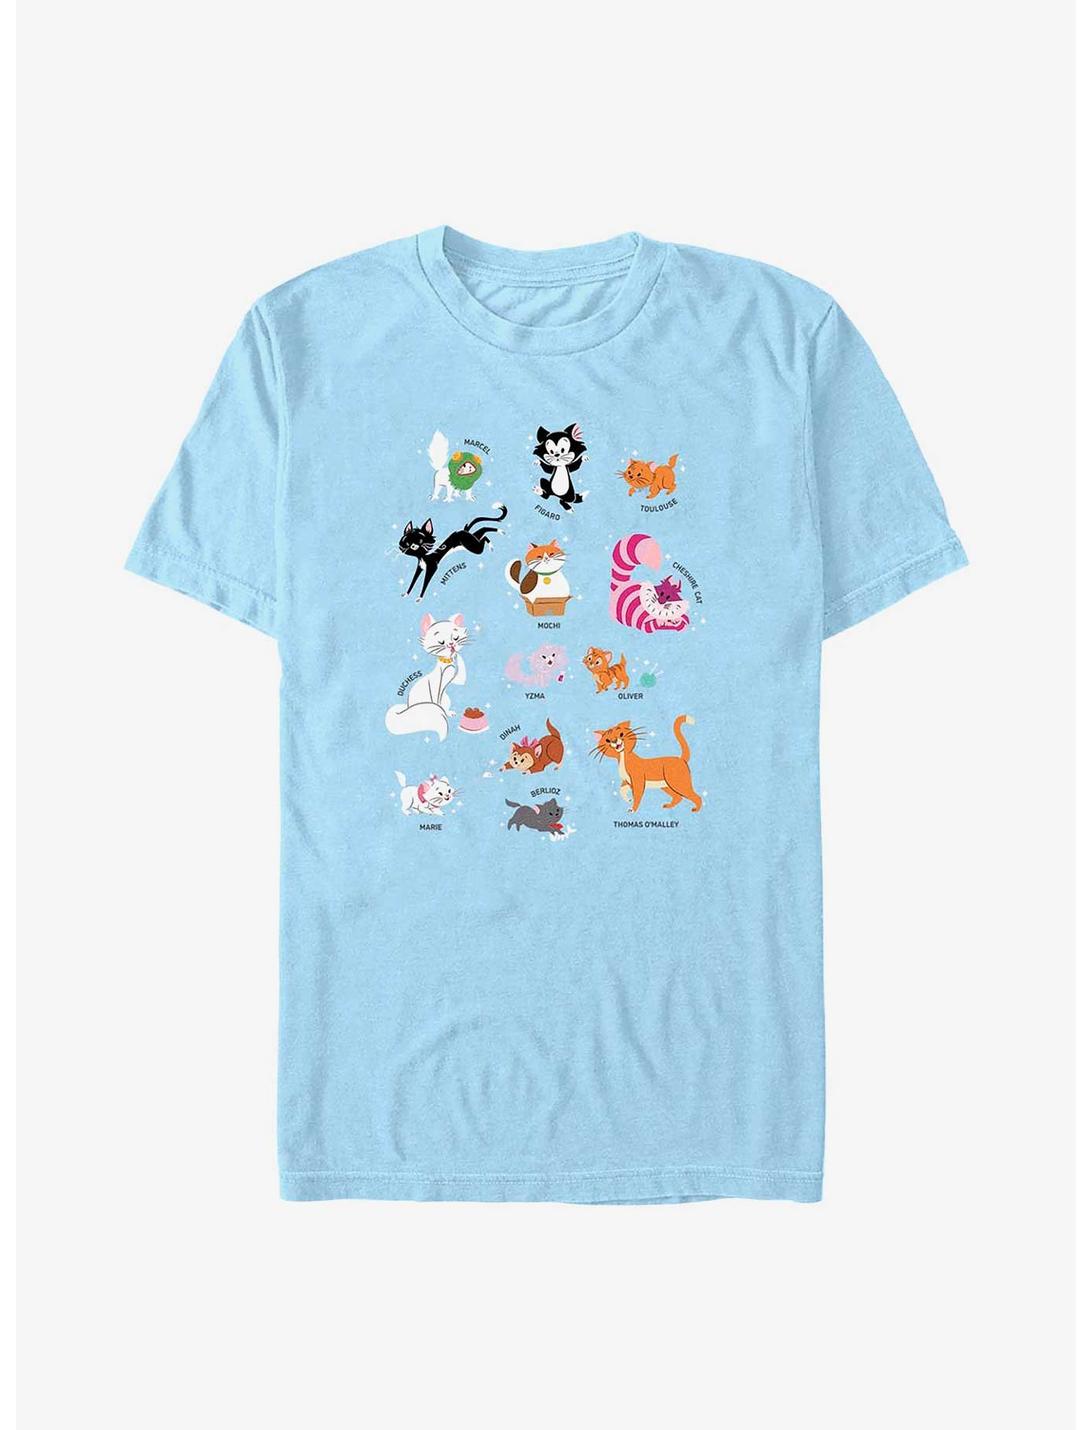 Disney Channel Cats of Disney T-Shirt, LT BLUE, hi-res